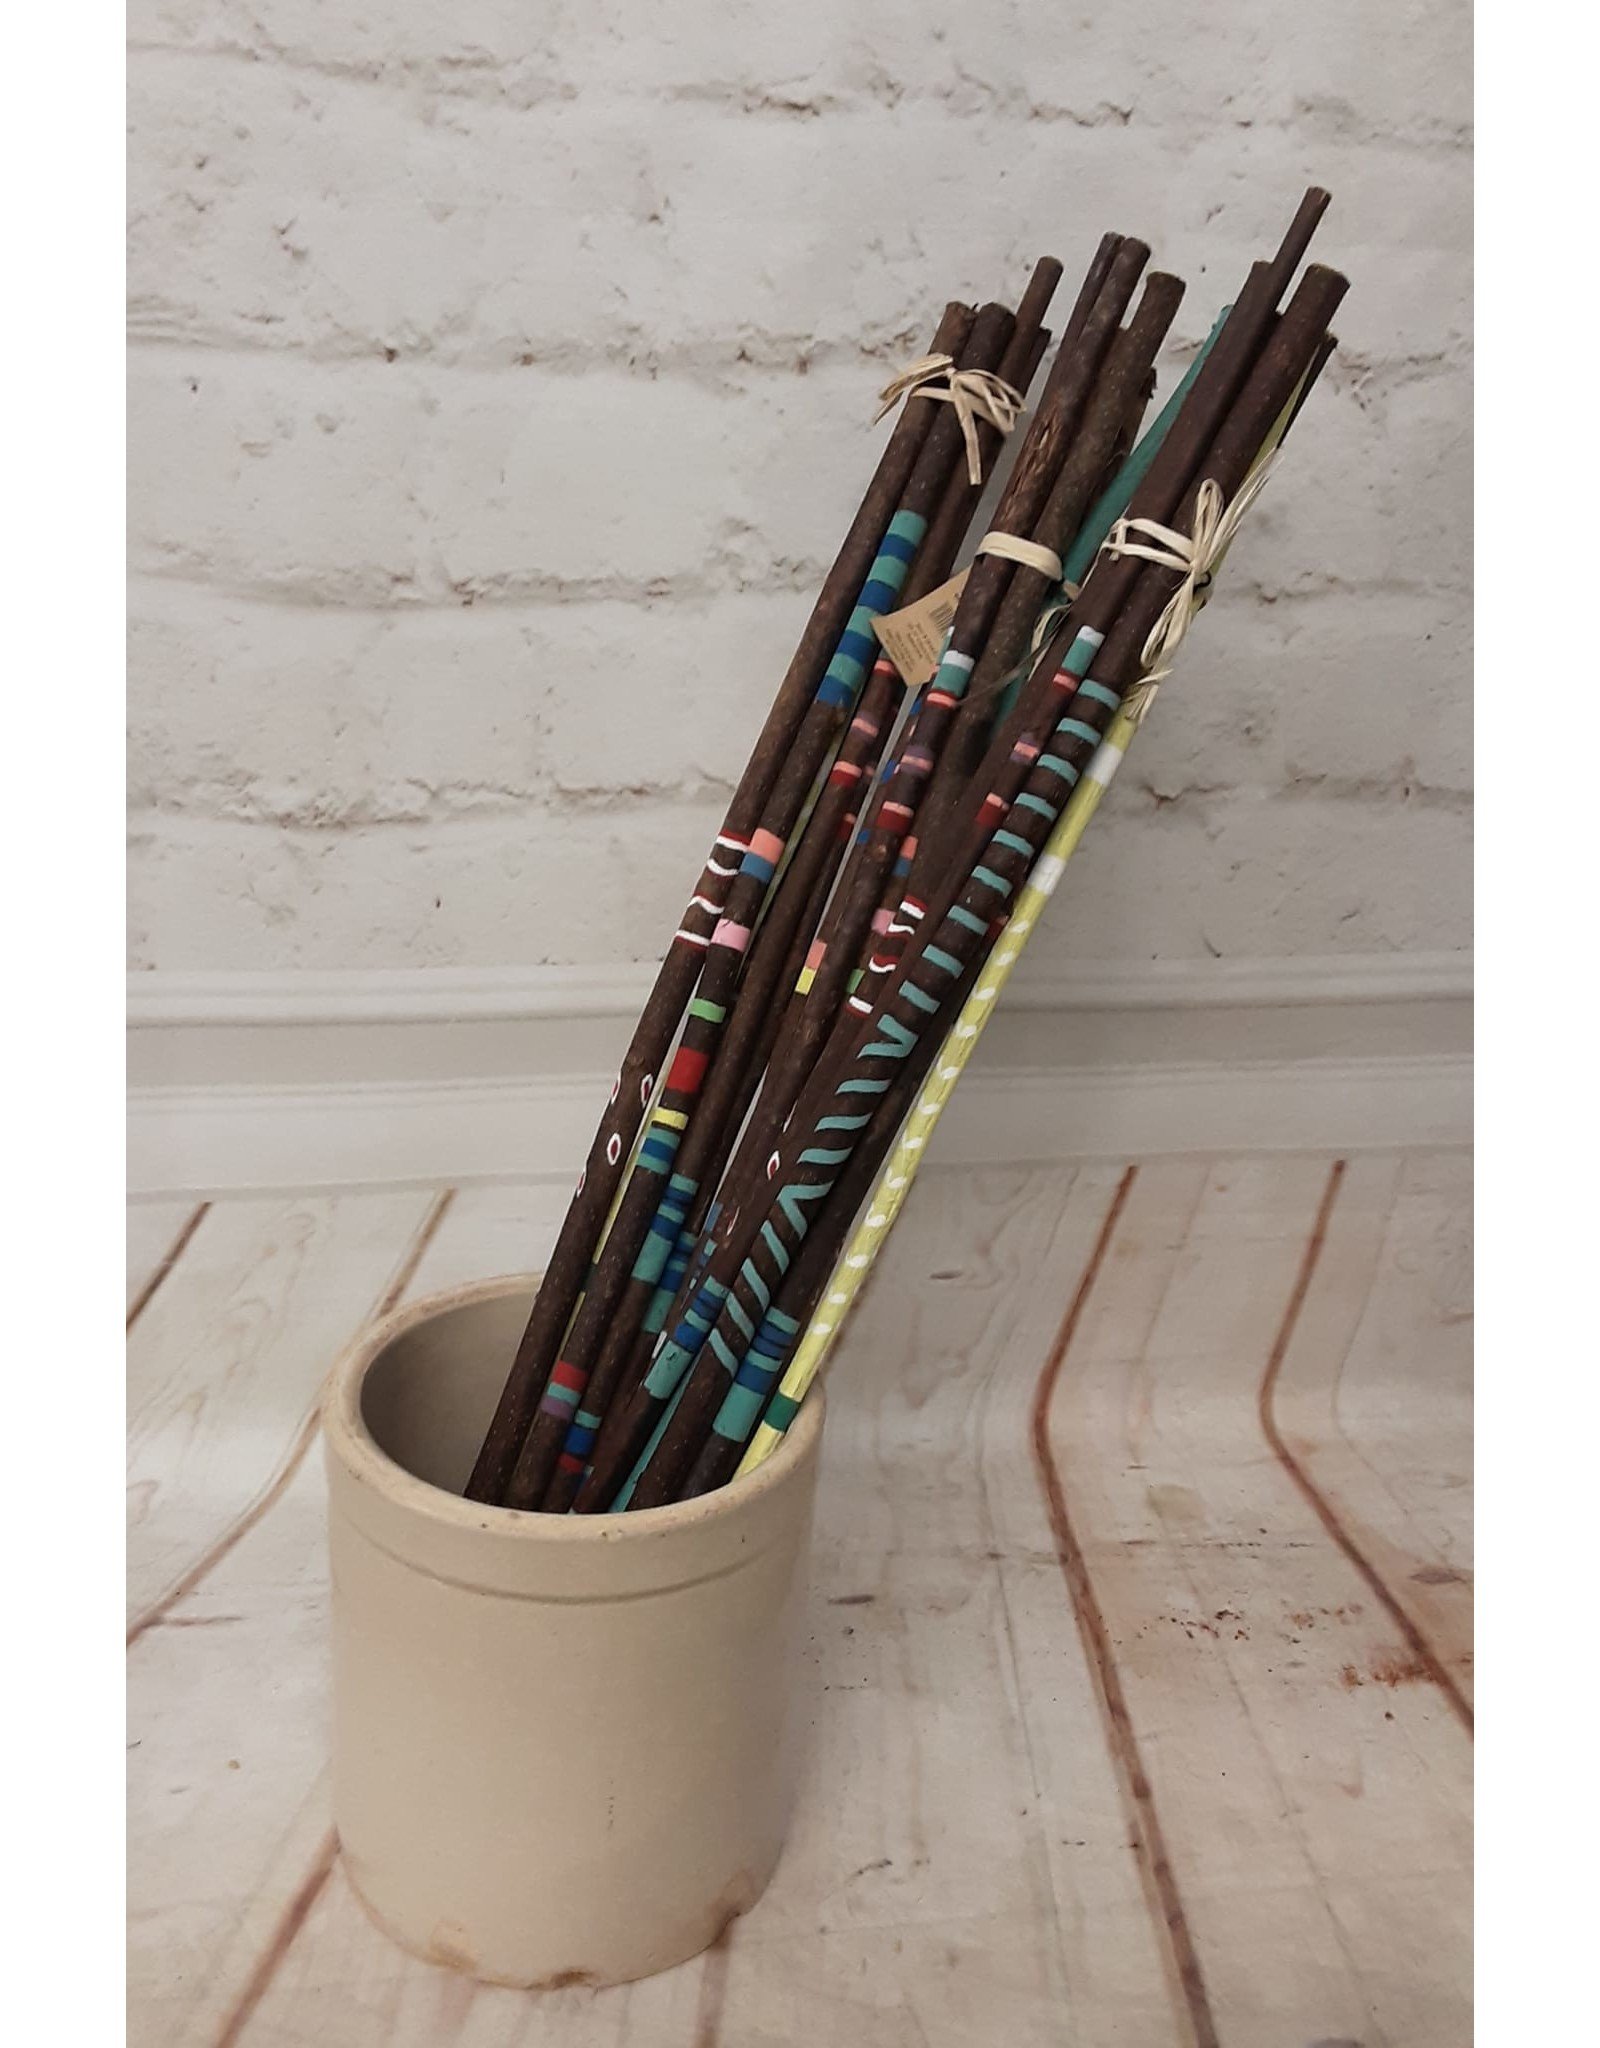 Hand-Painted Acacia Wood Sticks, Set of 8